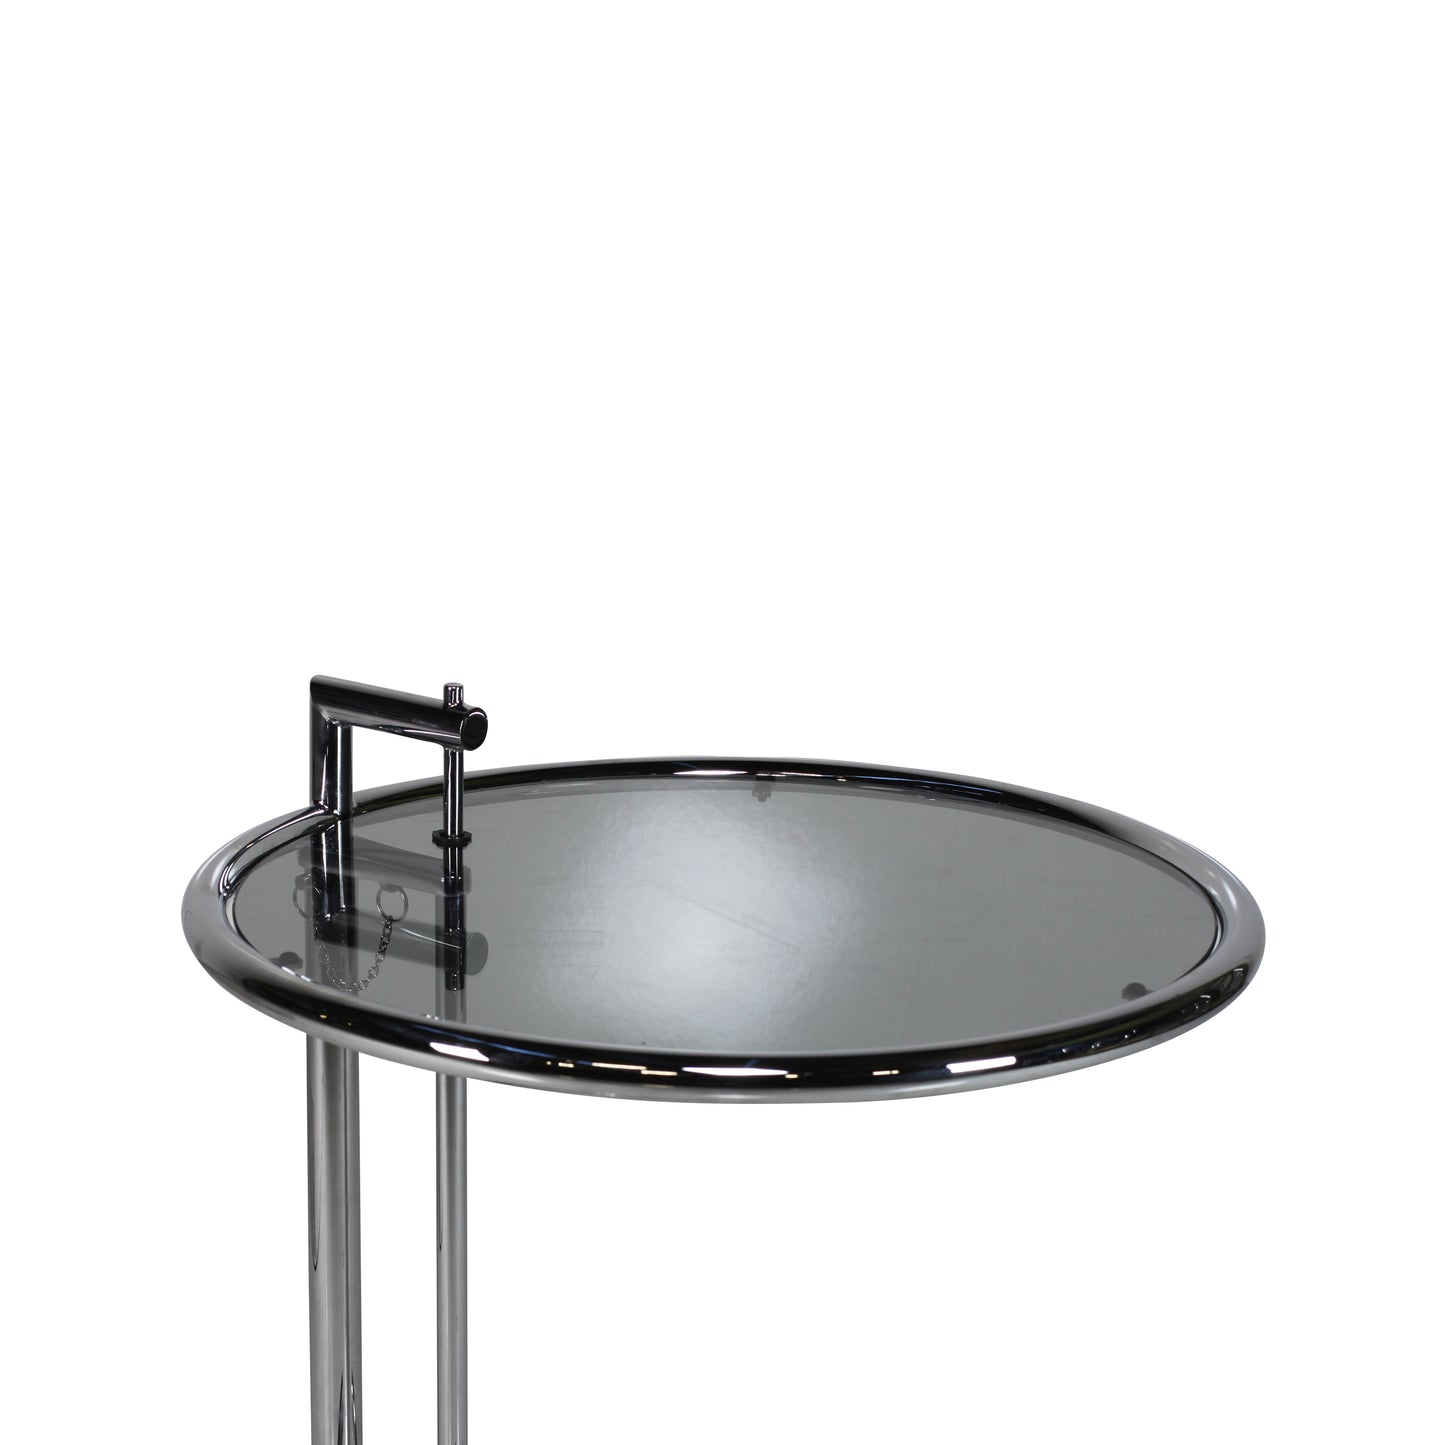 Adjustable table style | Chrome smoke glass | Side